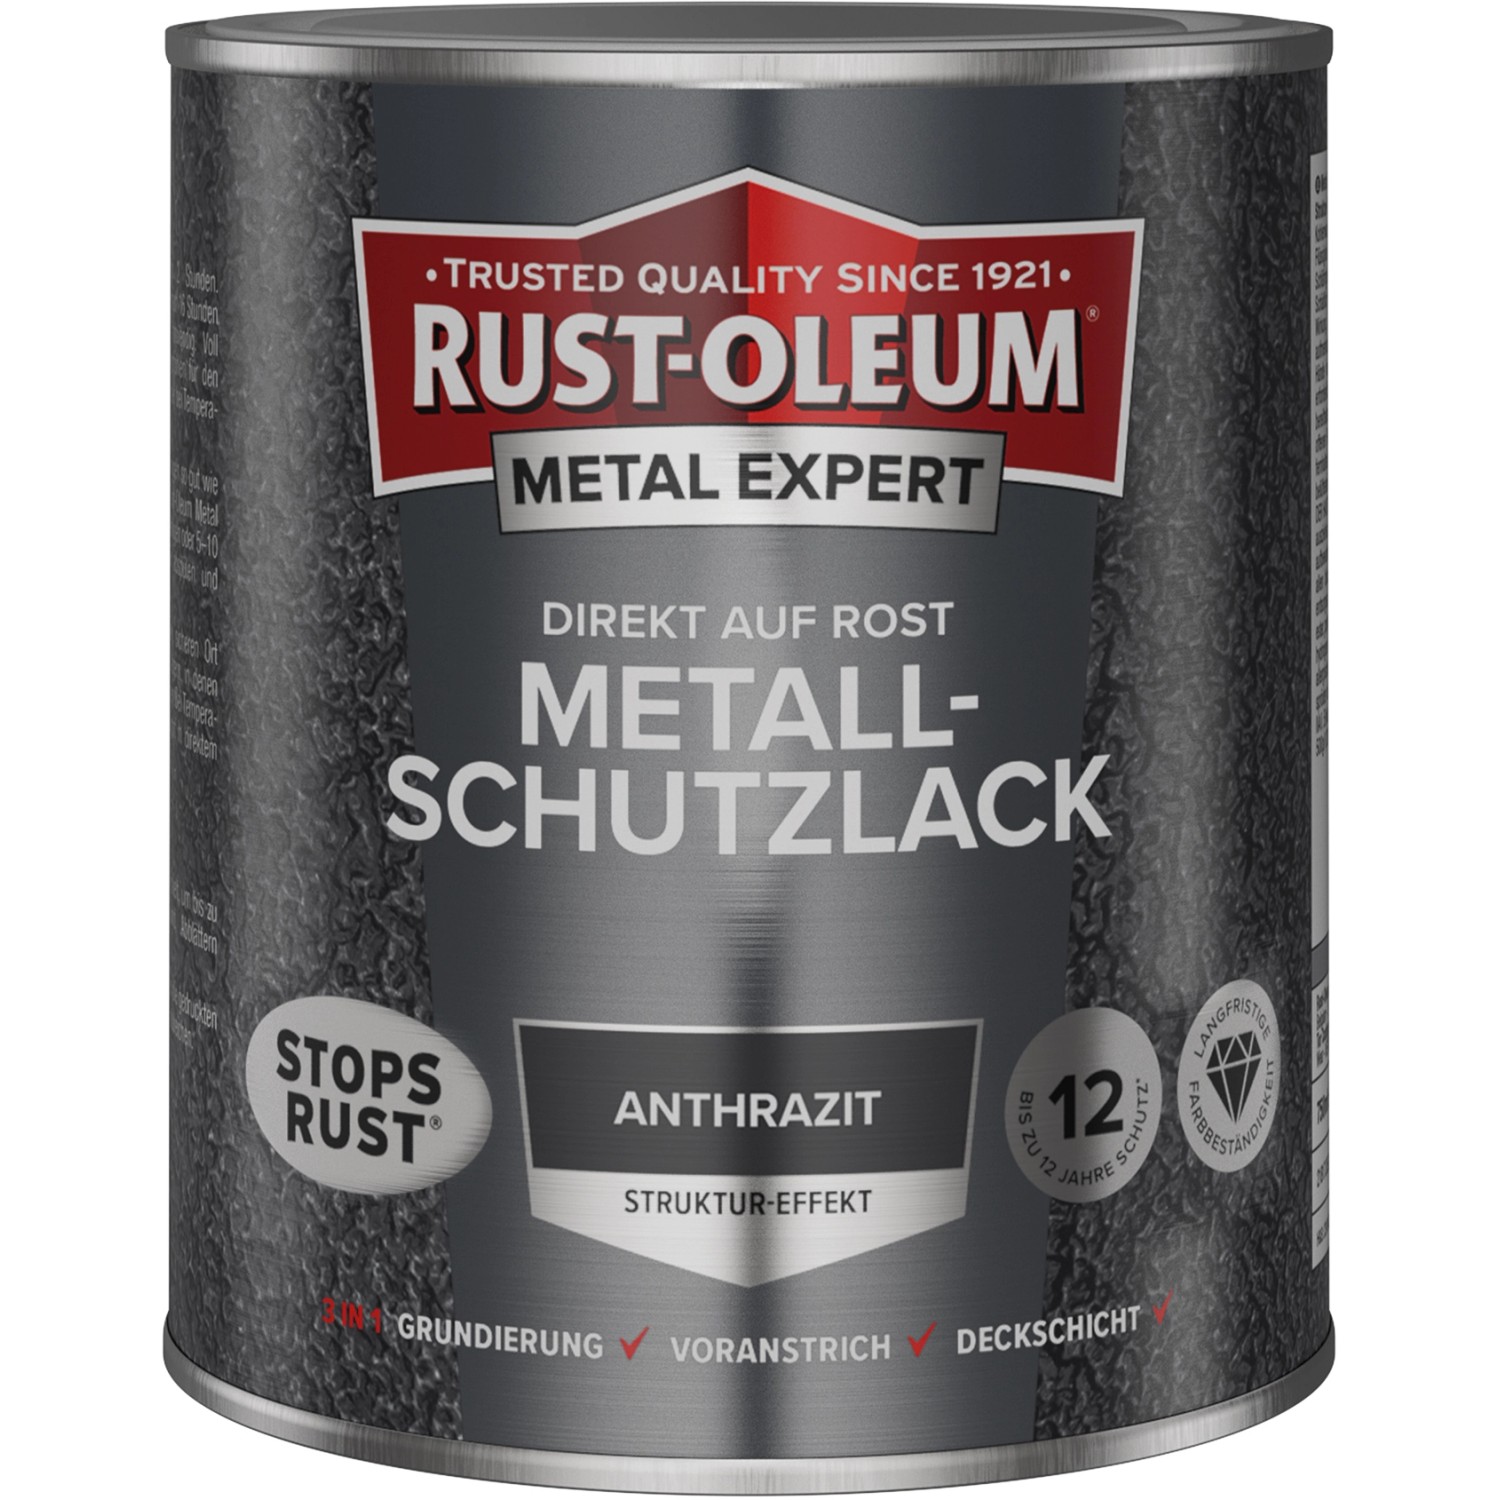 Rust-Oleum Metal Expert Struktur-Effekt Anthrazit 750 ml von Rust-Oleum